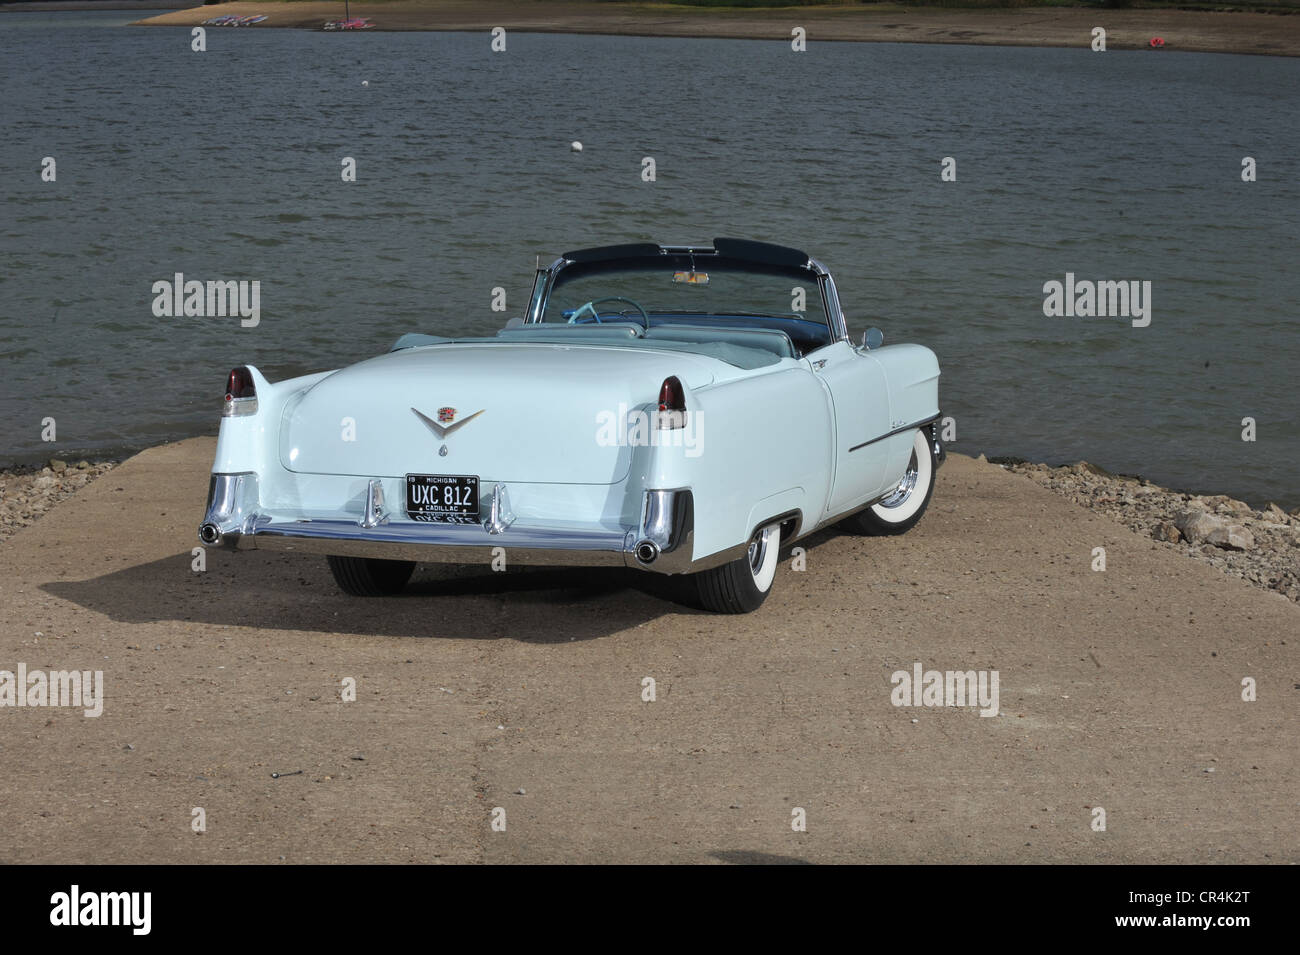 1954 Cadillac convertible coche clásico americano Foto de stock